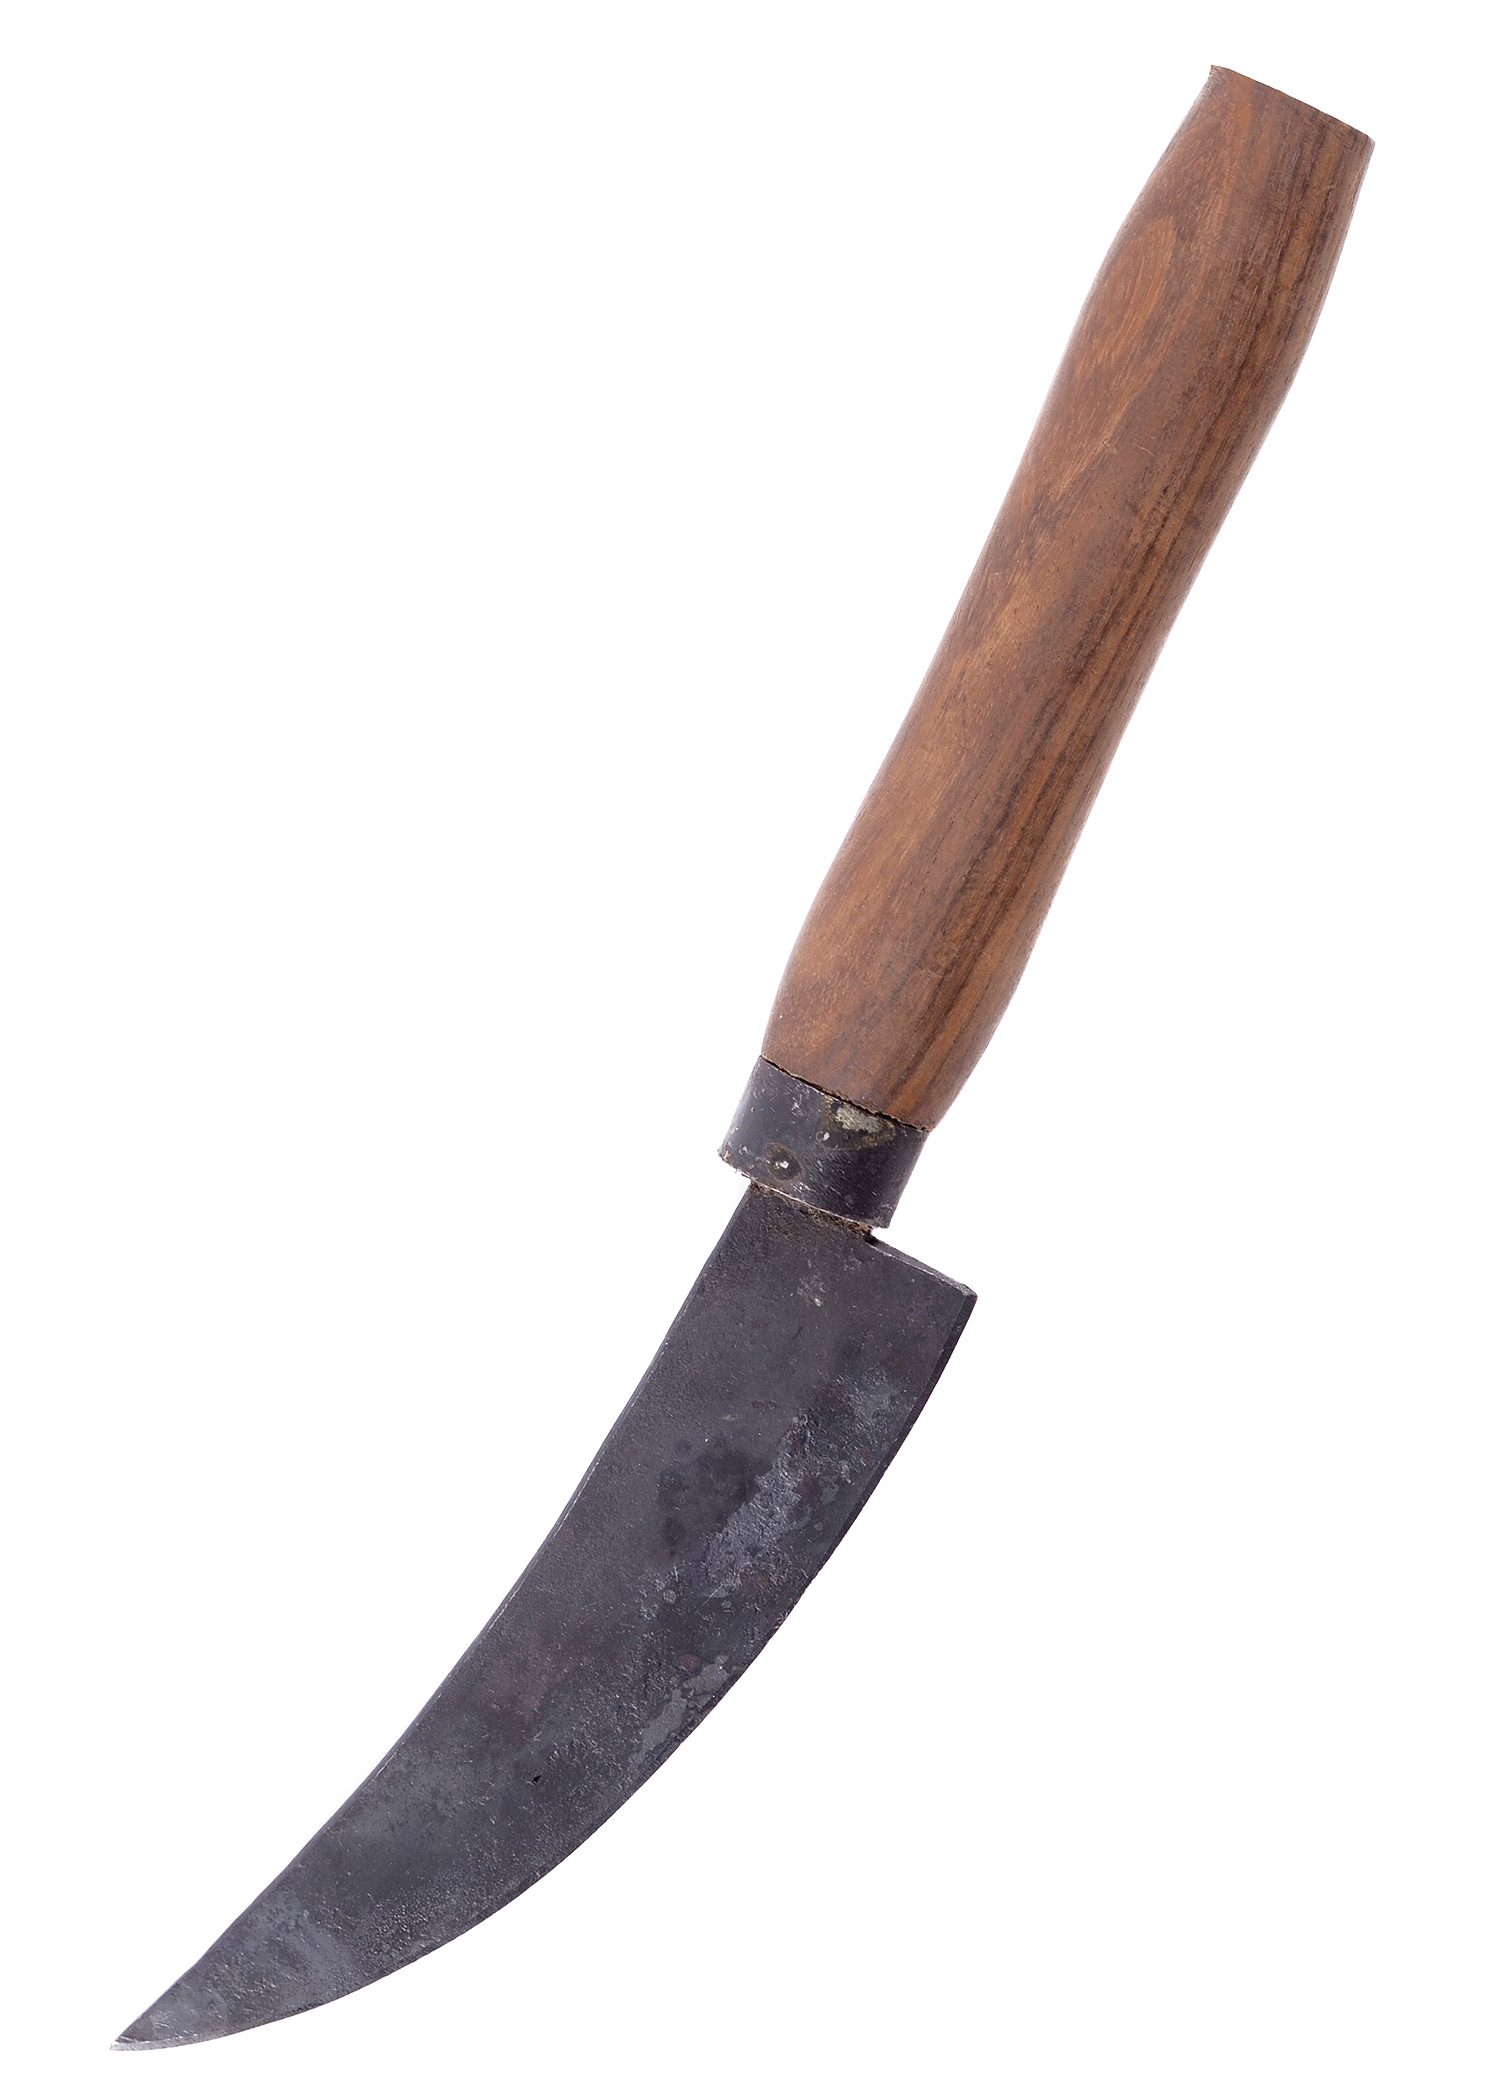 Gebrauchsmesser mit Holzgriff, handgeschmiedet, ca. 28cm lang